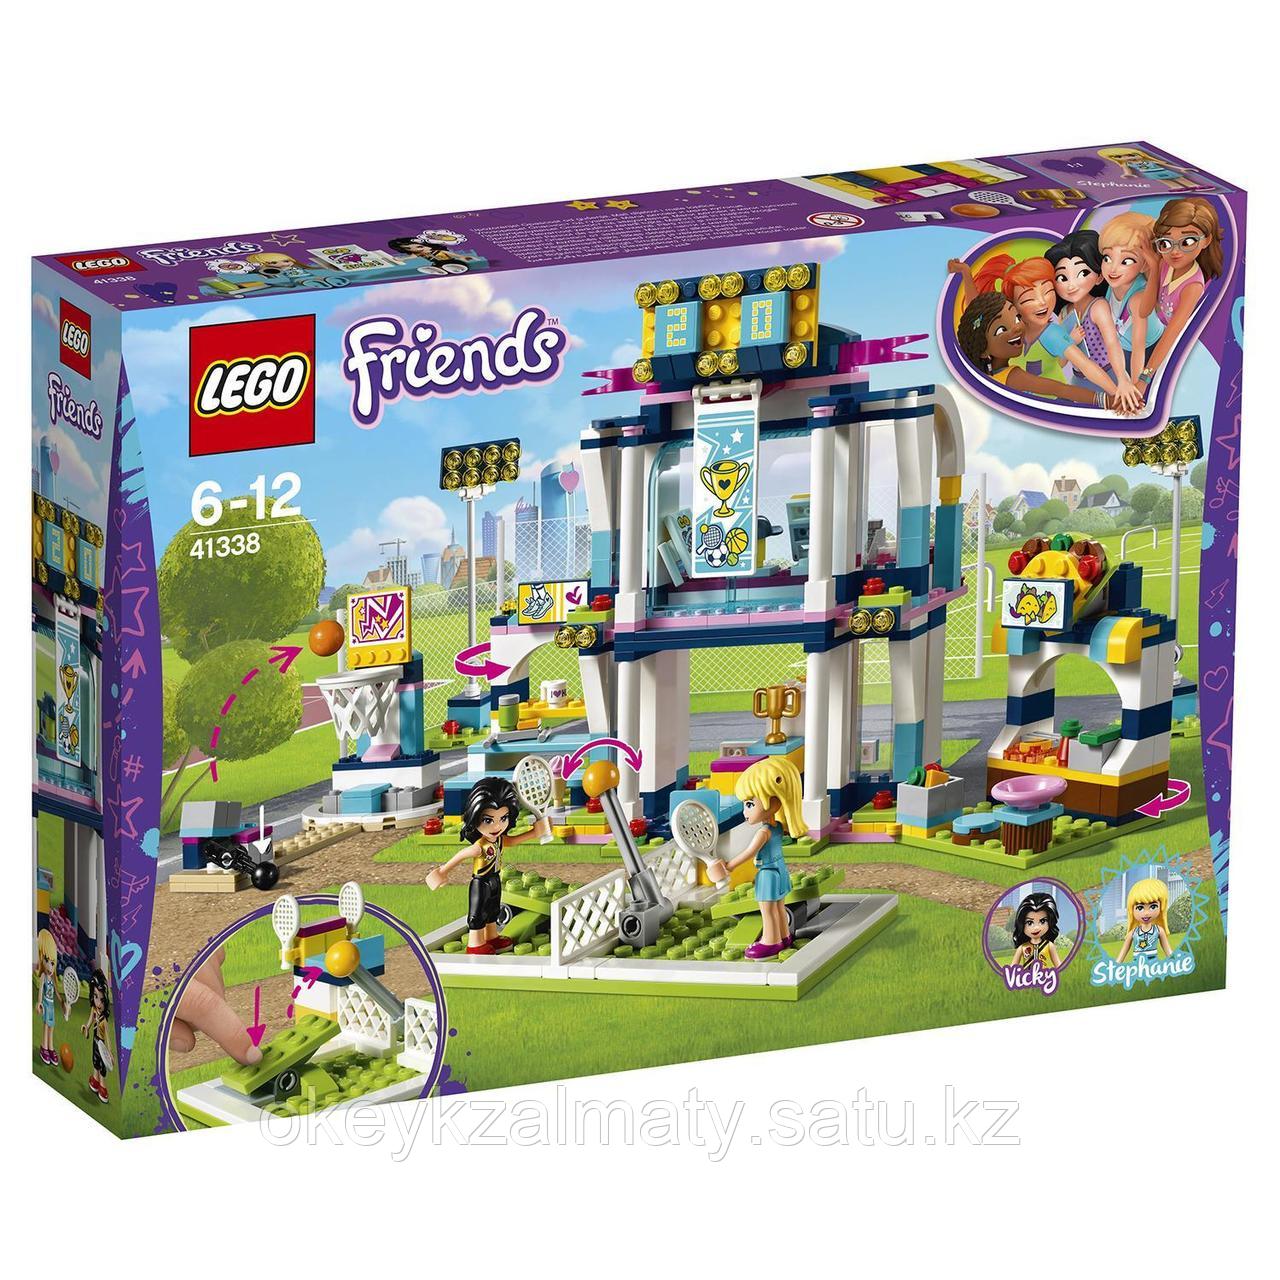 LEGO Friends: Спортивная арена для Стефани 41338